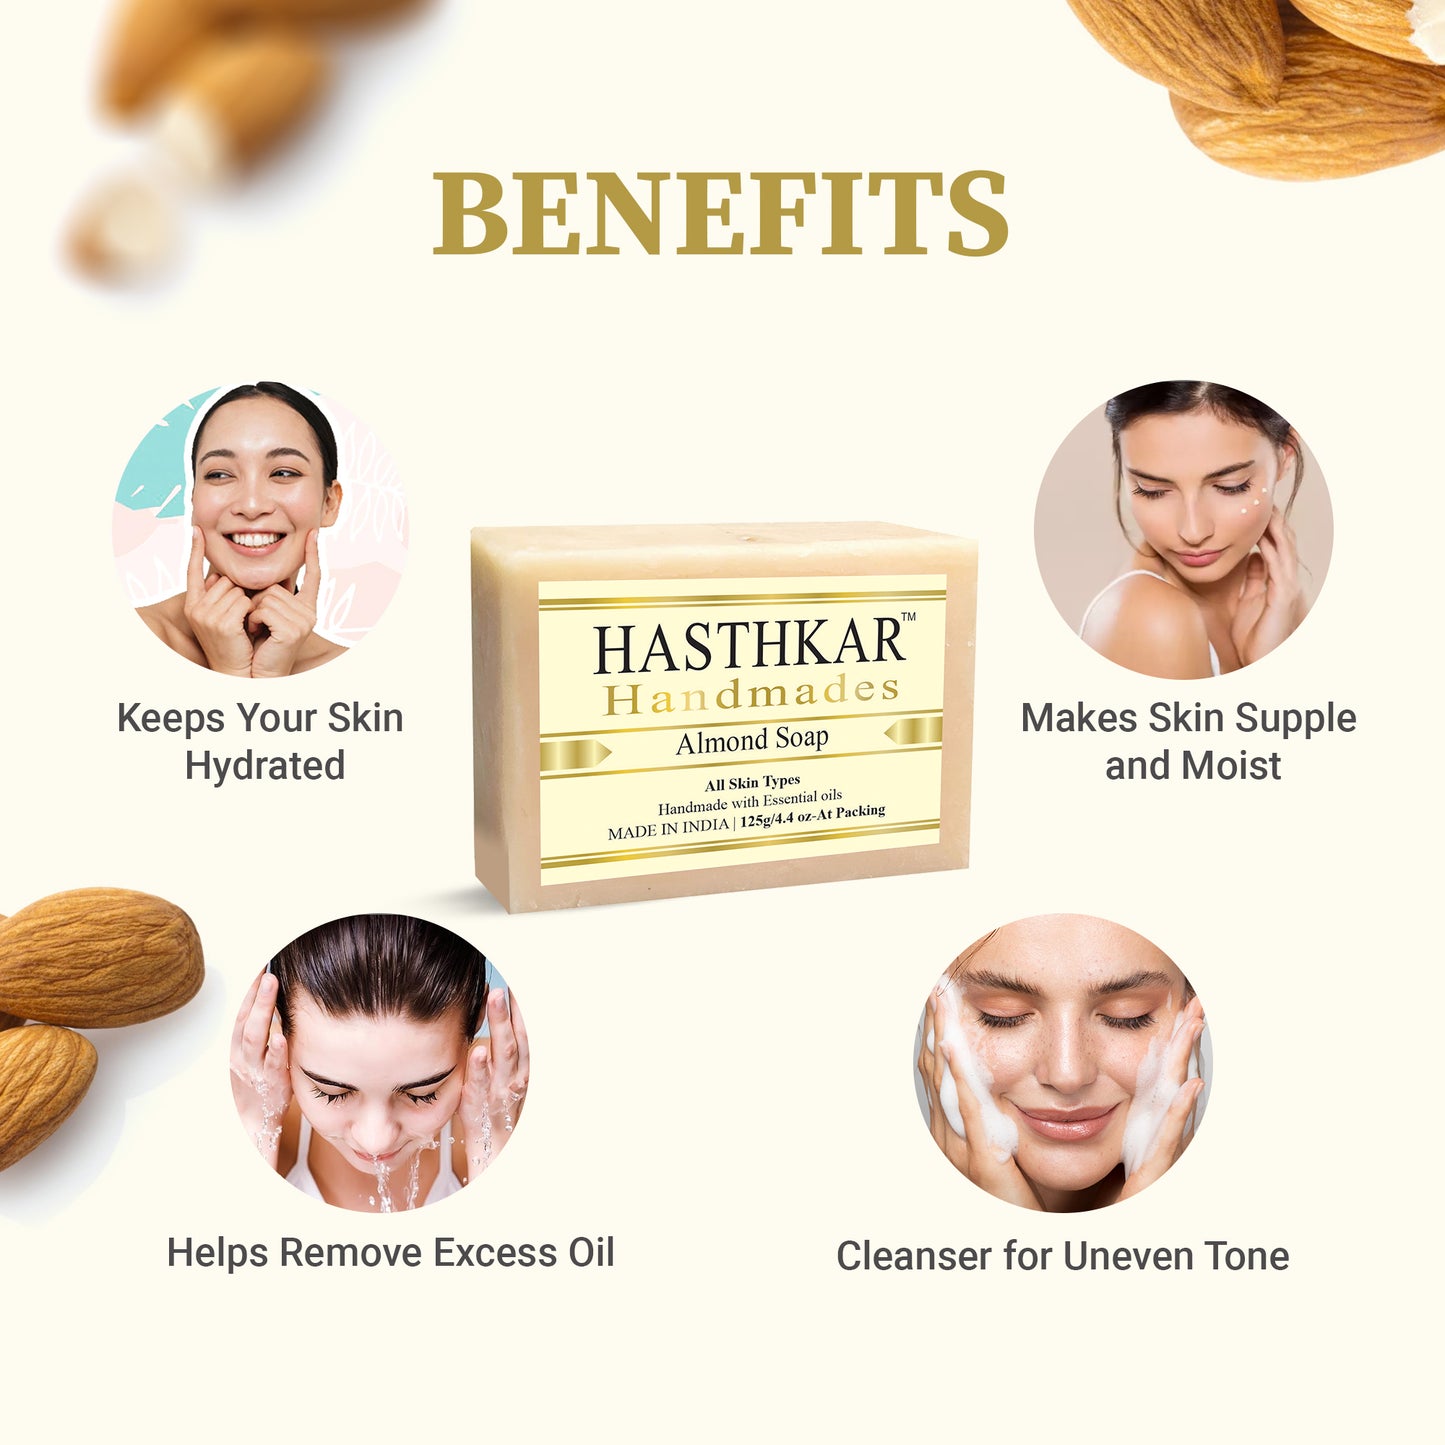 Hasthkar Handmades Glycerine Almond Soap 125gm Pack of 2